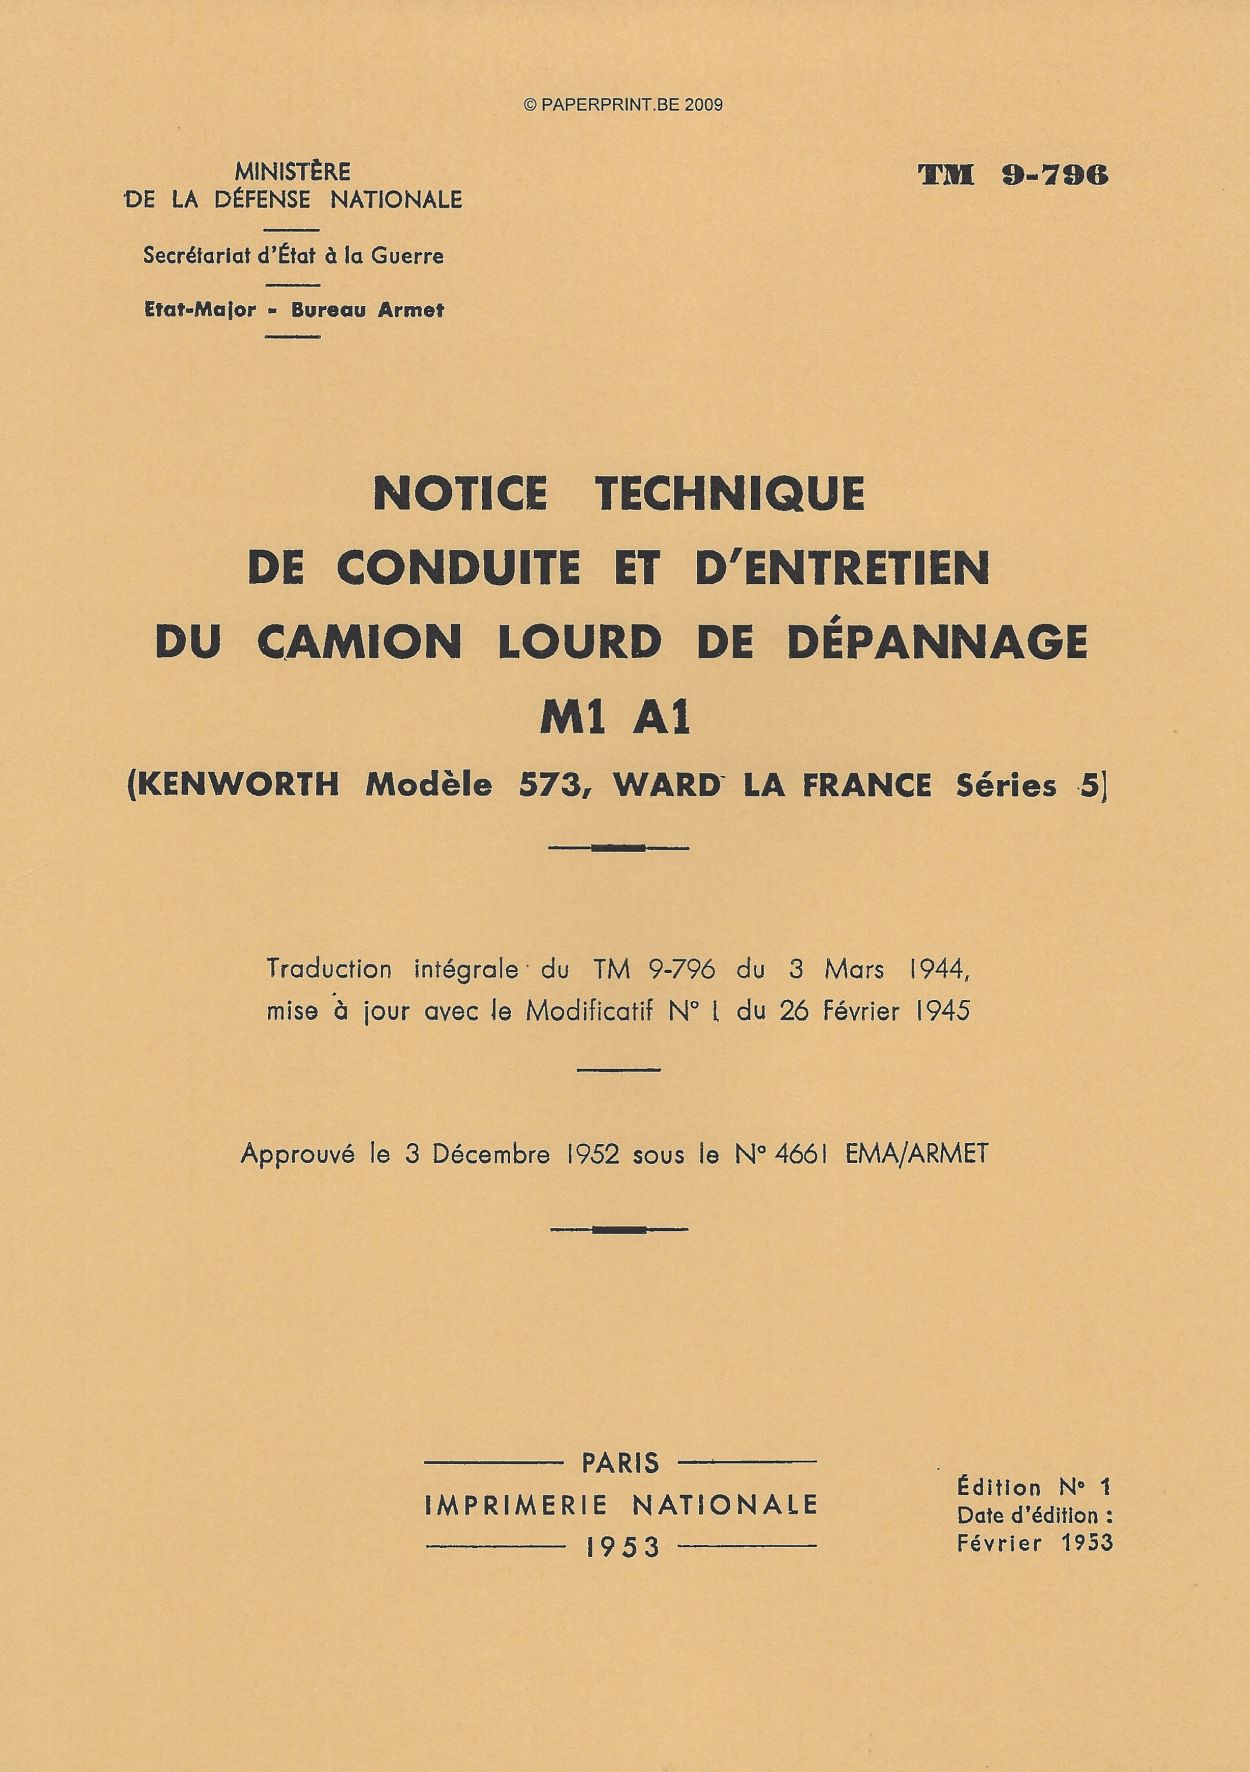 TM 9-796 FR CAMION LOURD DE DEPANNAGE M1 A1 (KENWORTH MODELE 573, WARD LA FRANCE SERIES 5)